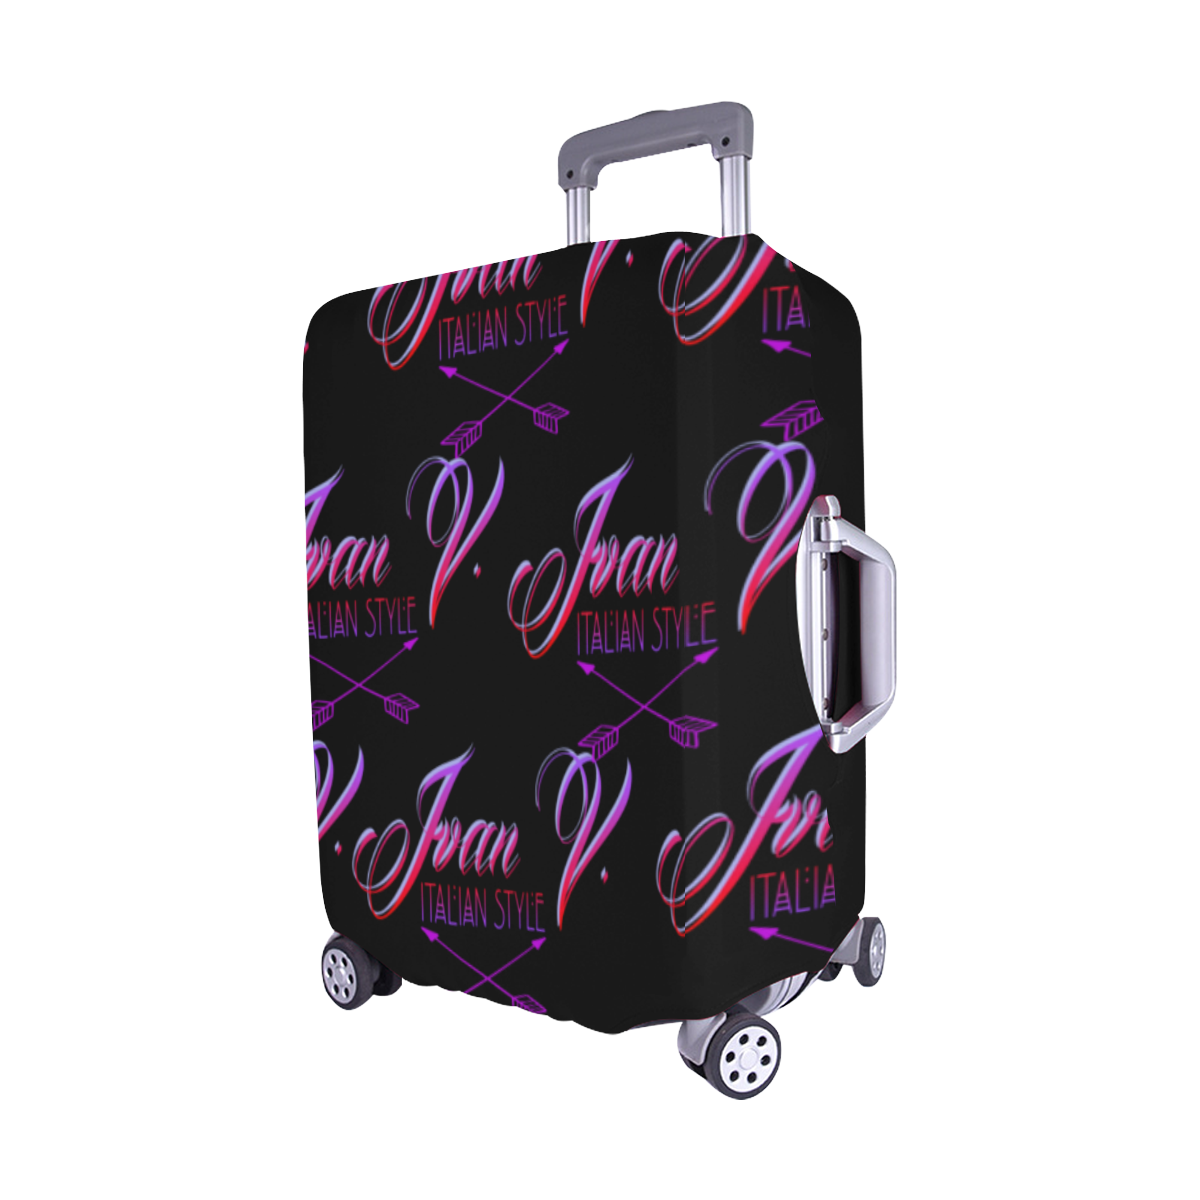 Ivan Venerucci Italian Style brand Luggage Cover/Medium 22"-25"